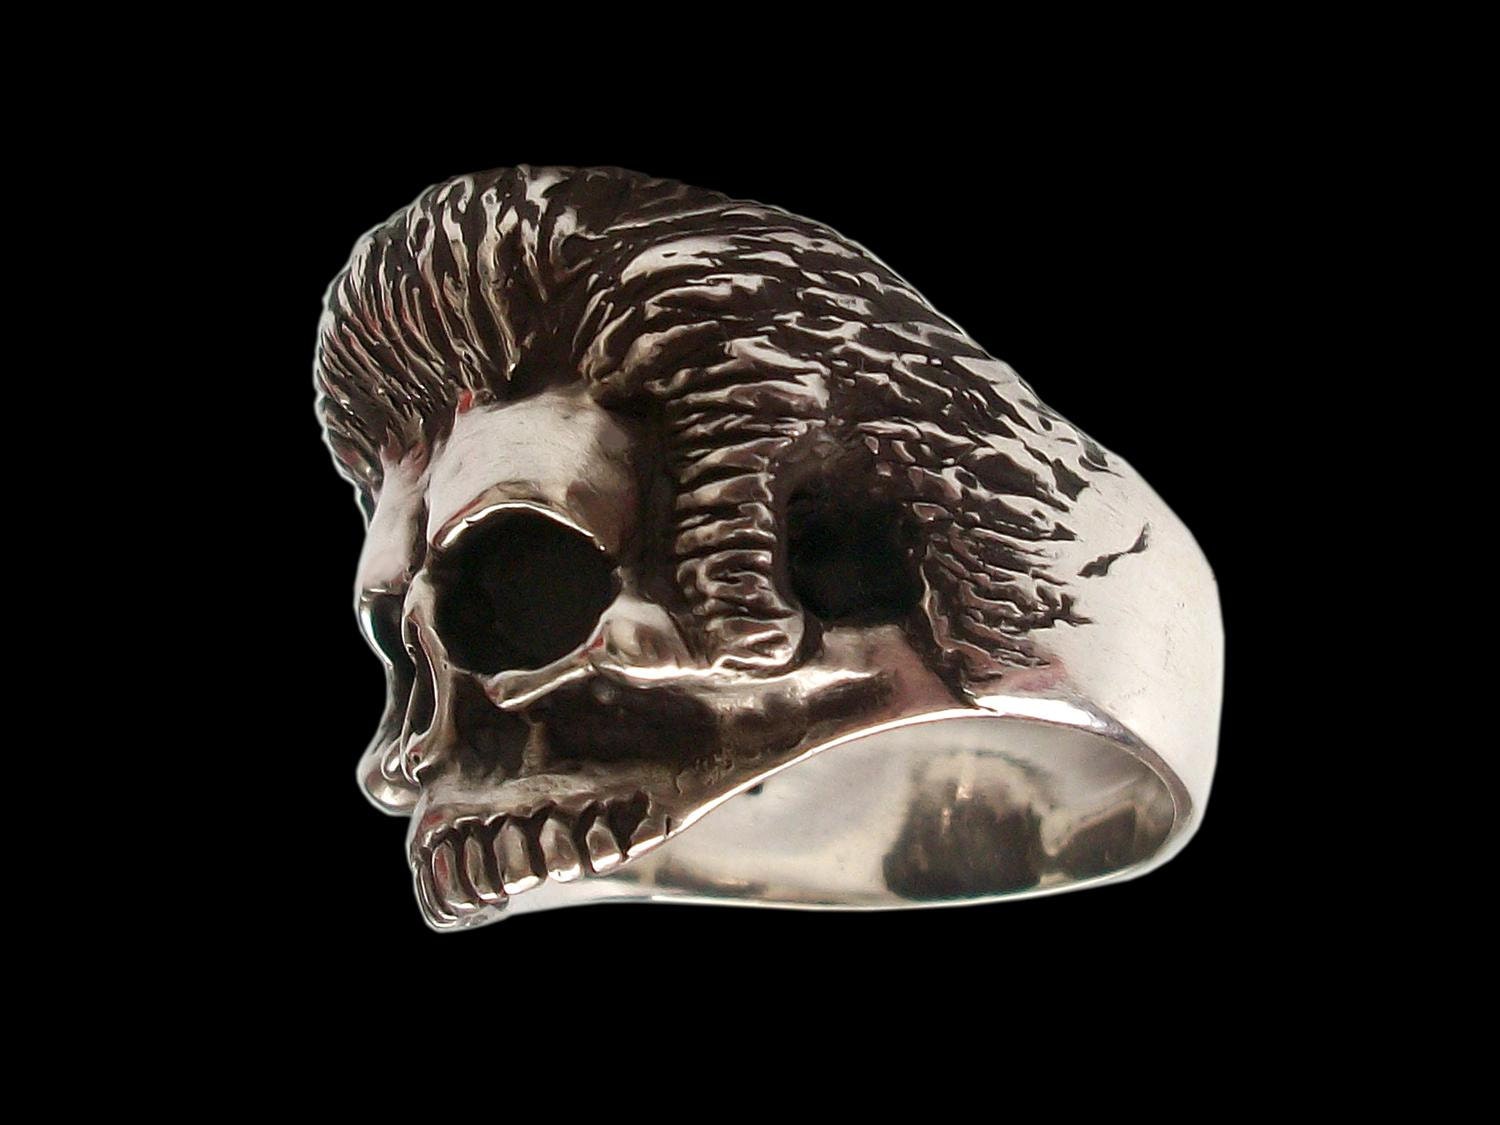 Skull ring - Sterling Silver Elvis Presley Skull Ring - ALL SIZES